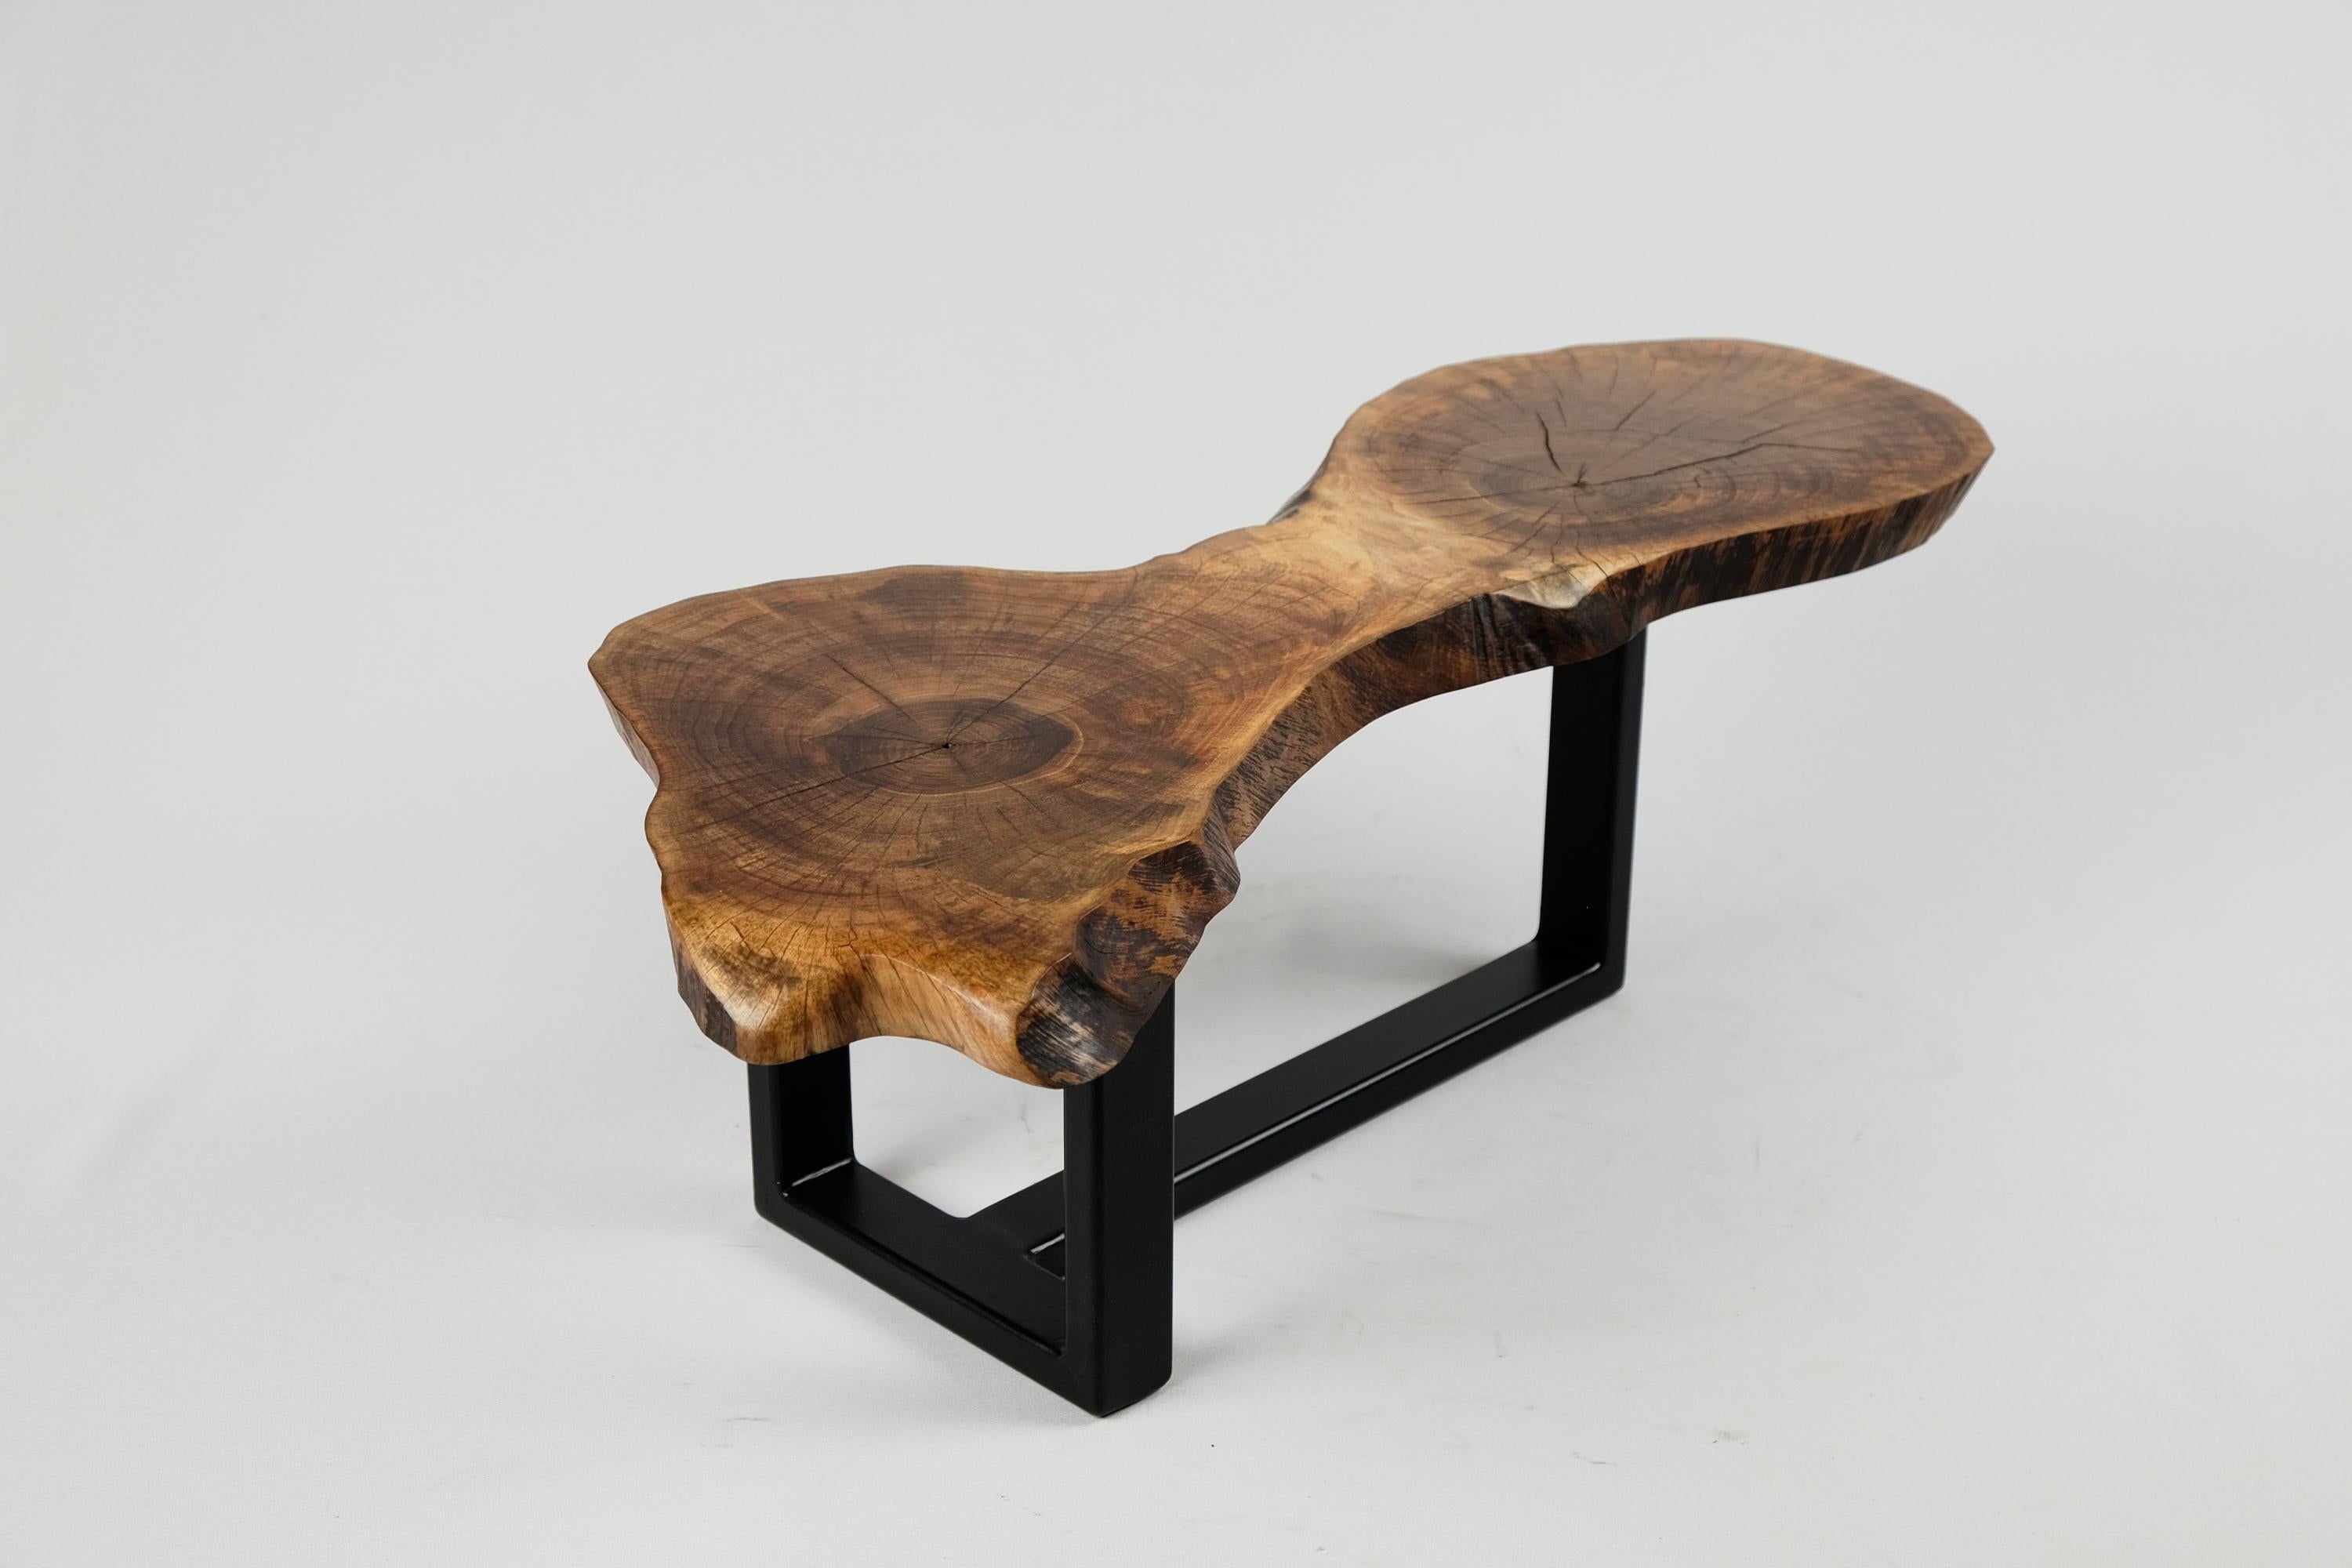 Original Contemporary Design, Burnt Oak with Steel, Unique Side Table, Logniture 2